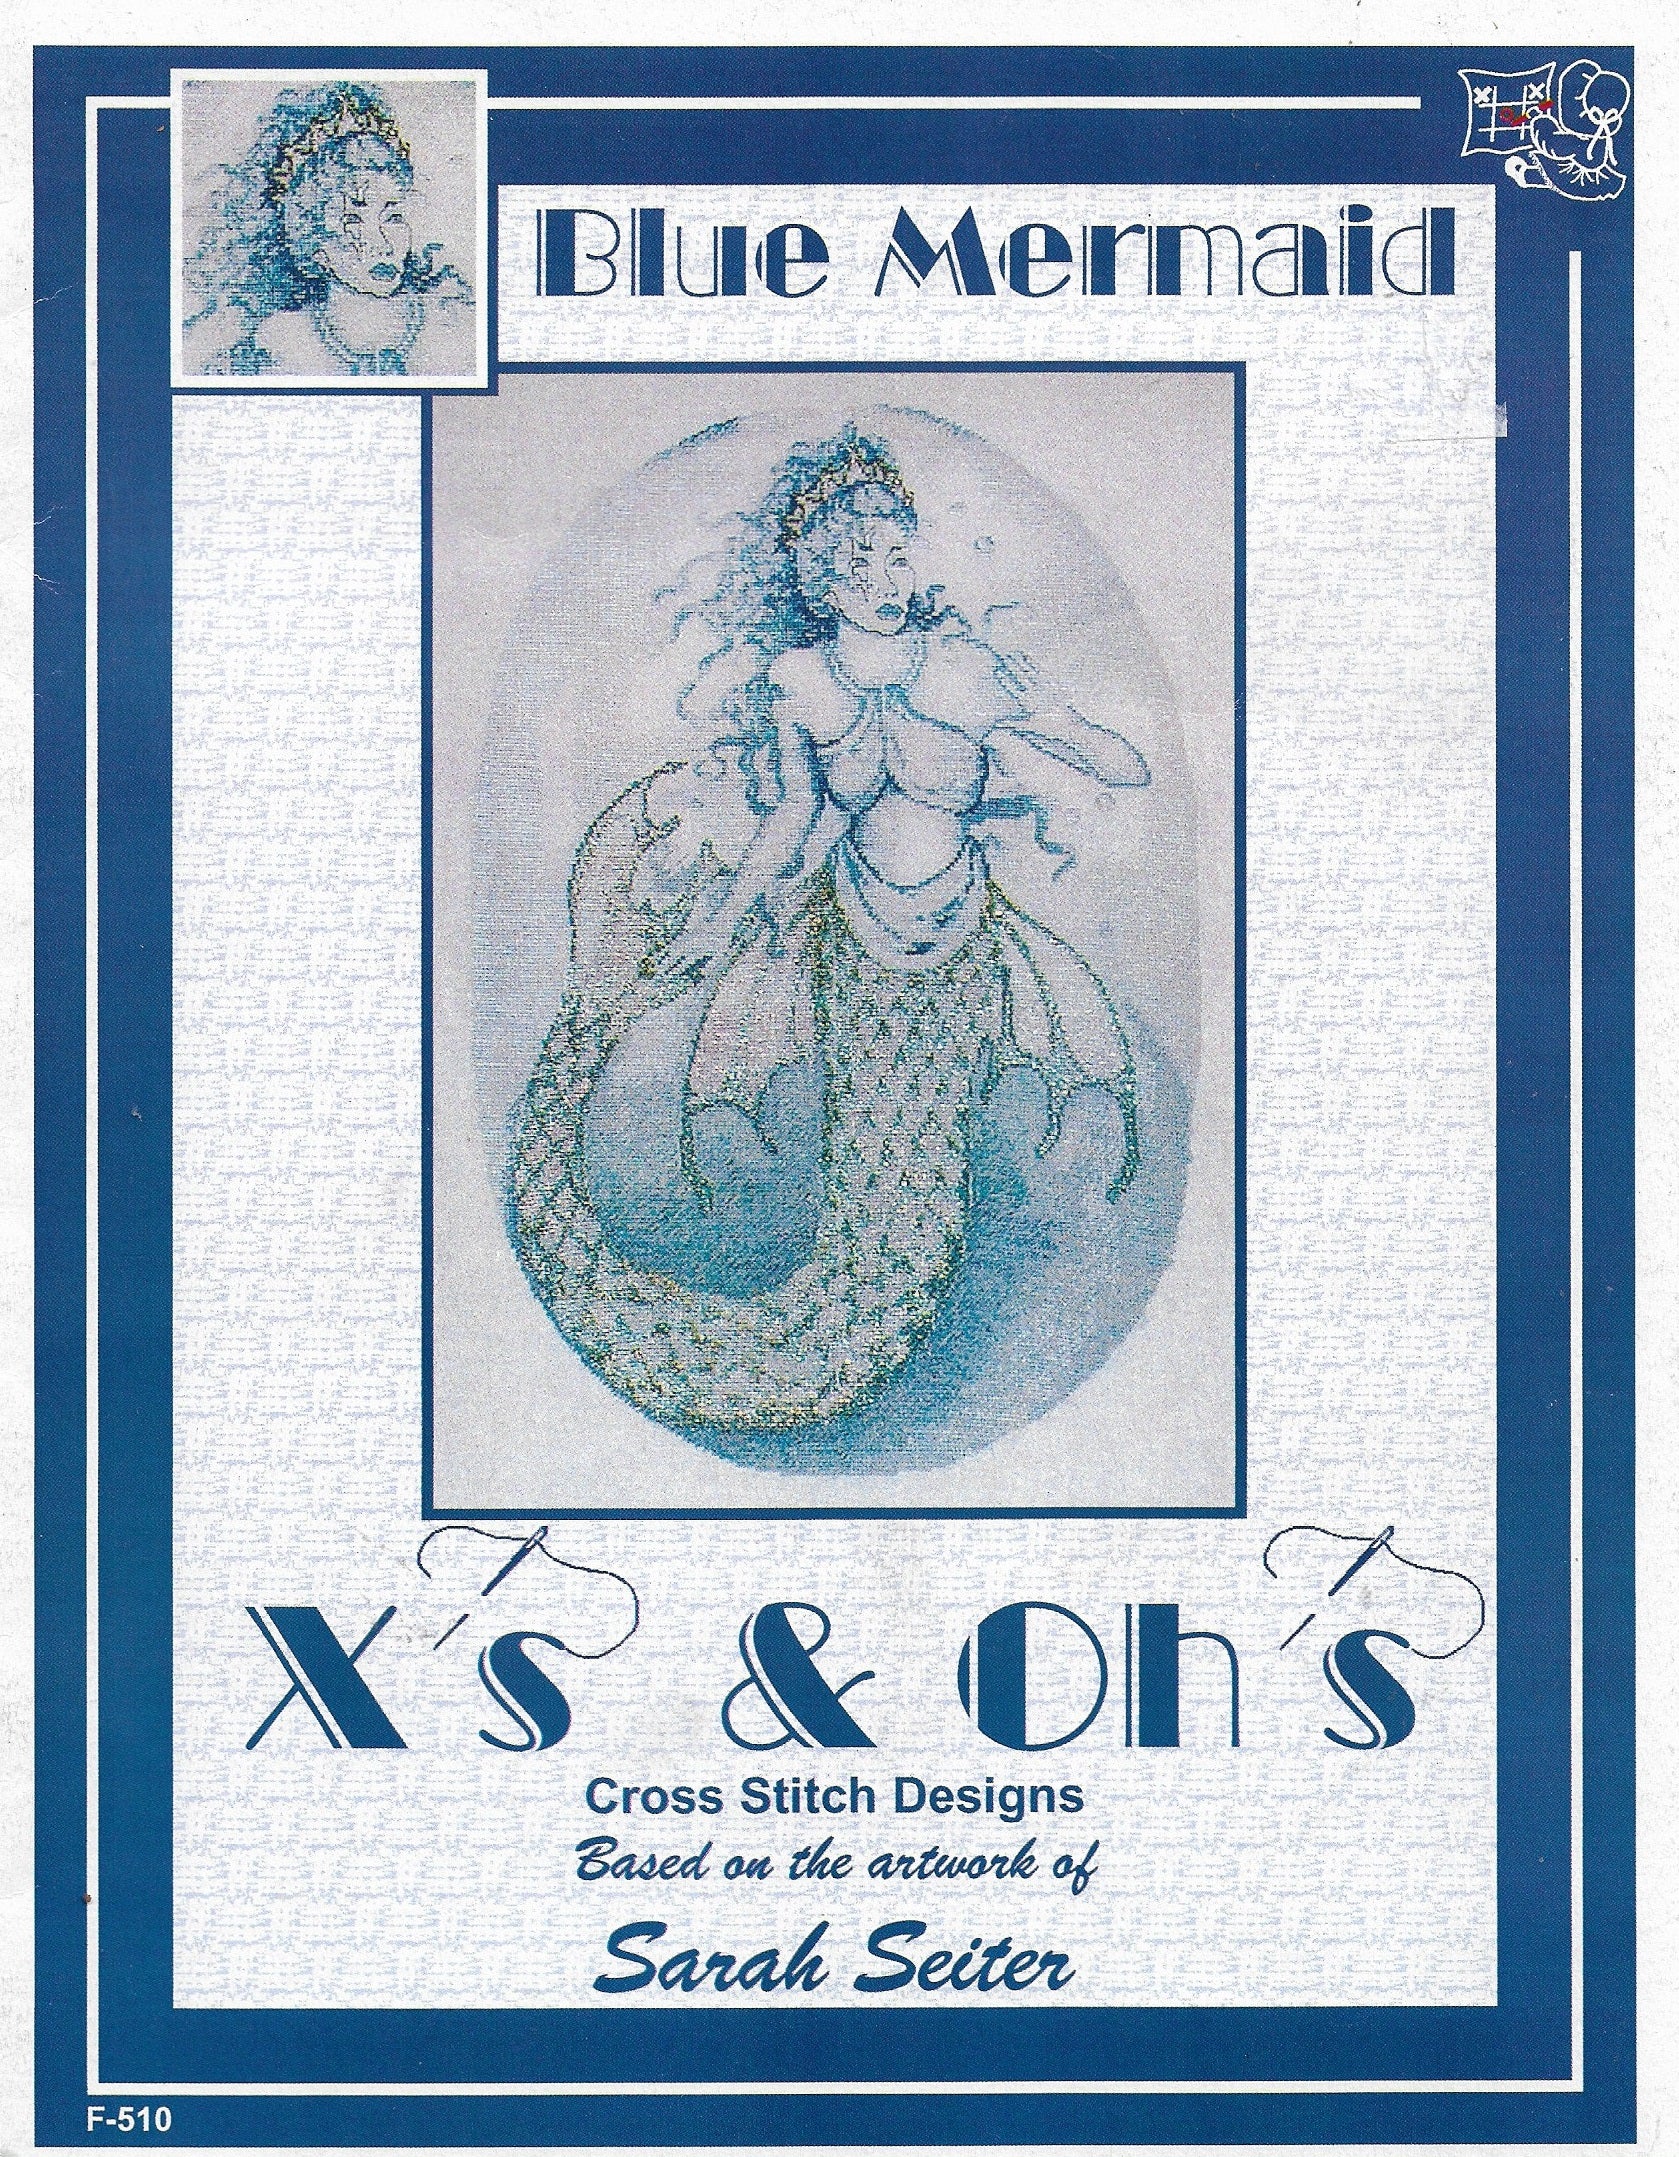 X's & Oh's Blue Mermaid cross stitch pattern